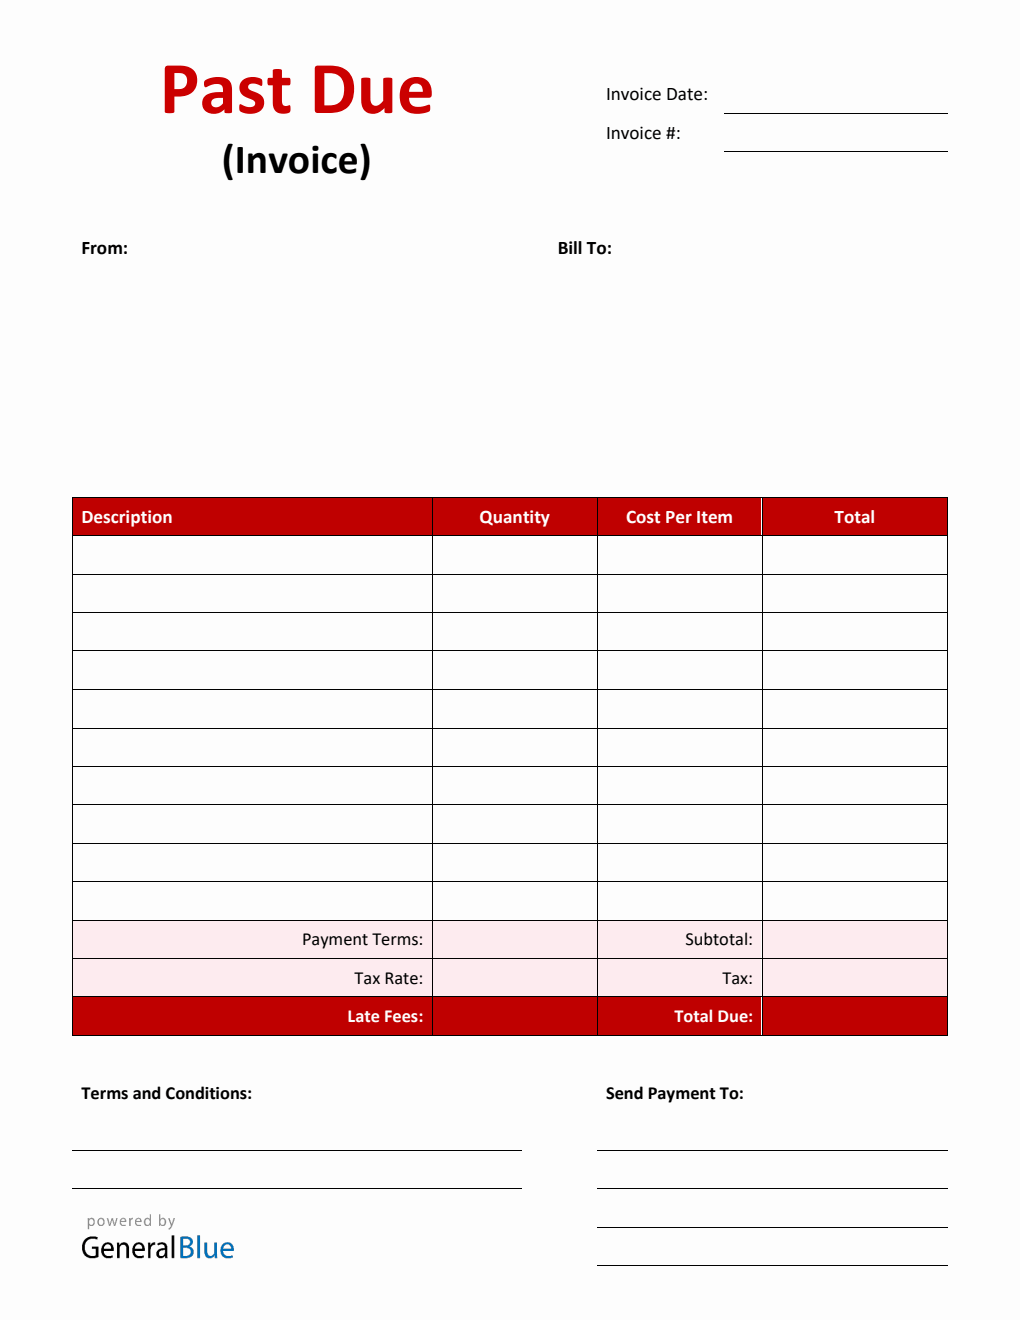 Past Due Invoice in PDF (Basic)